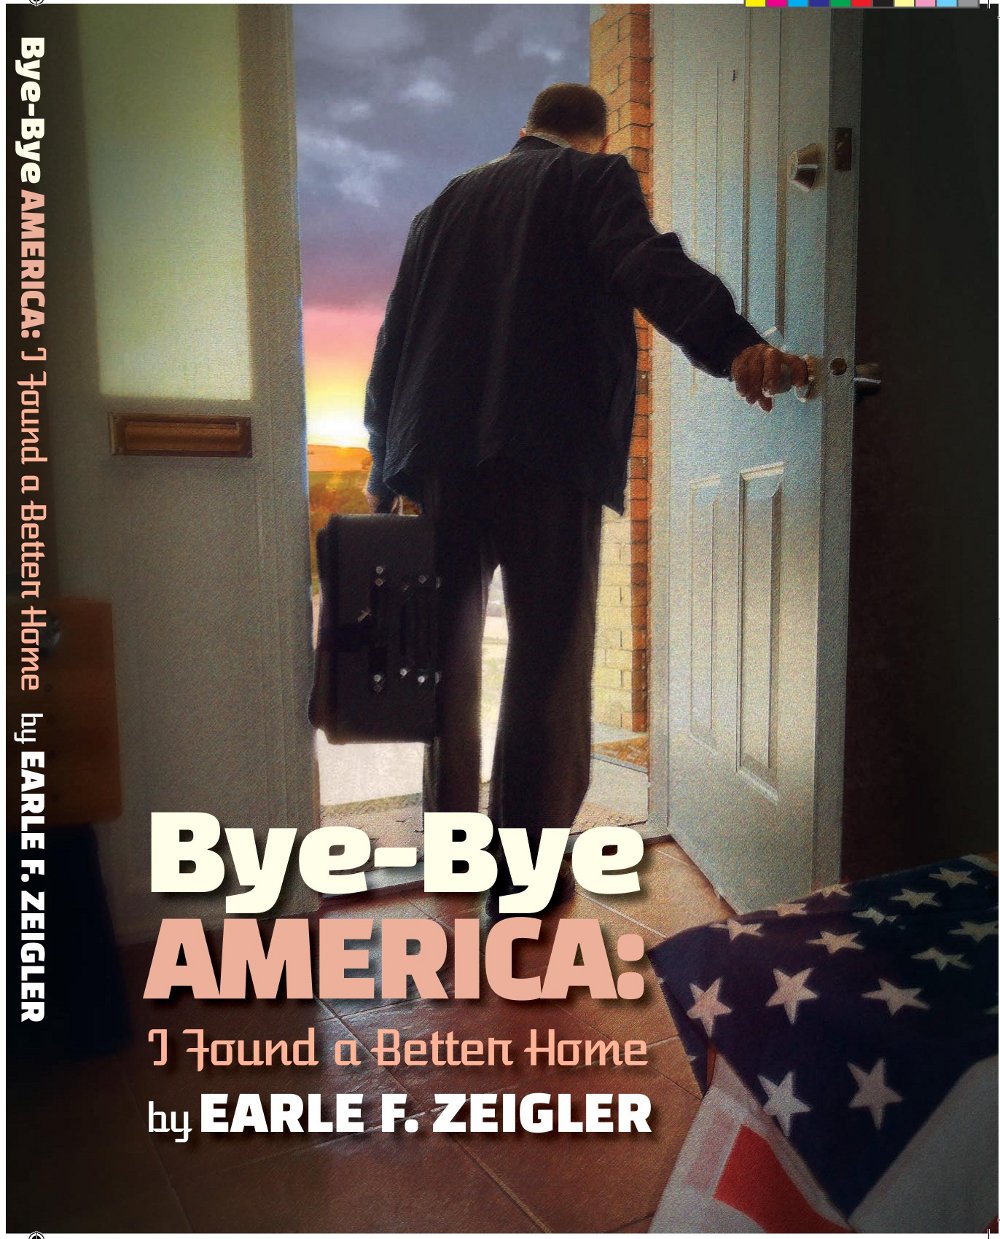 Click to Order - "Bye-Bye America"